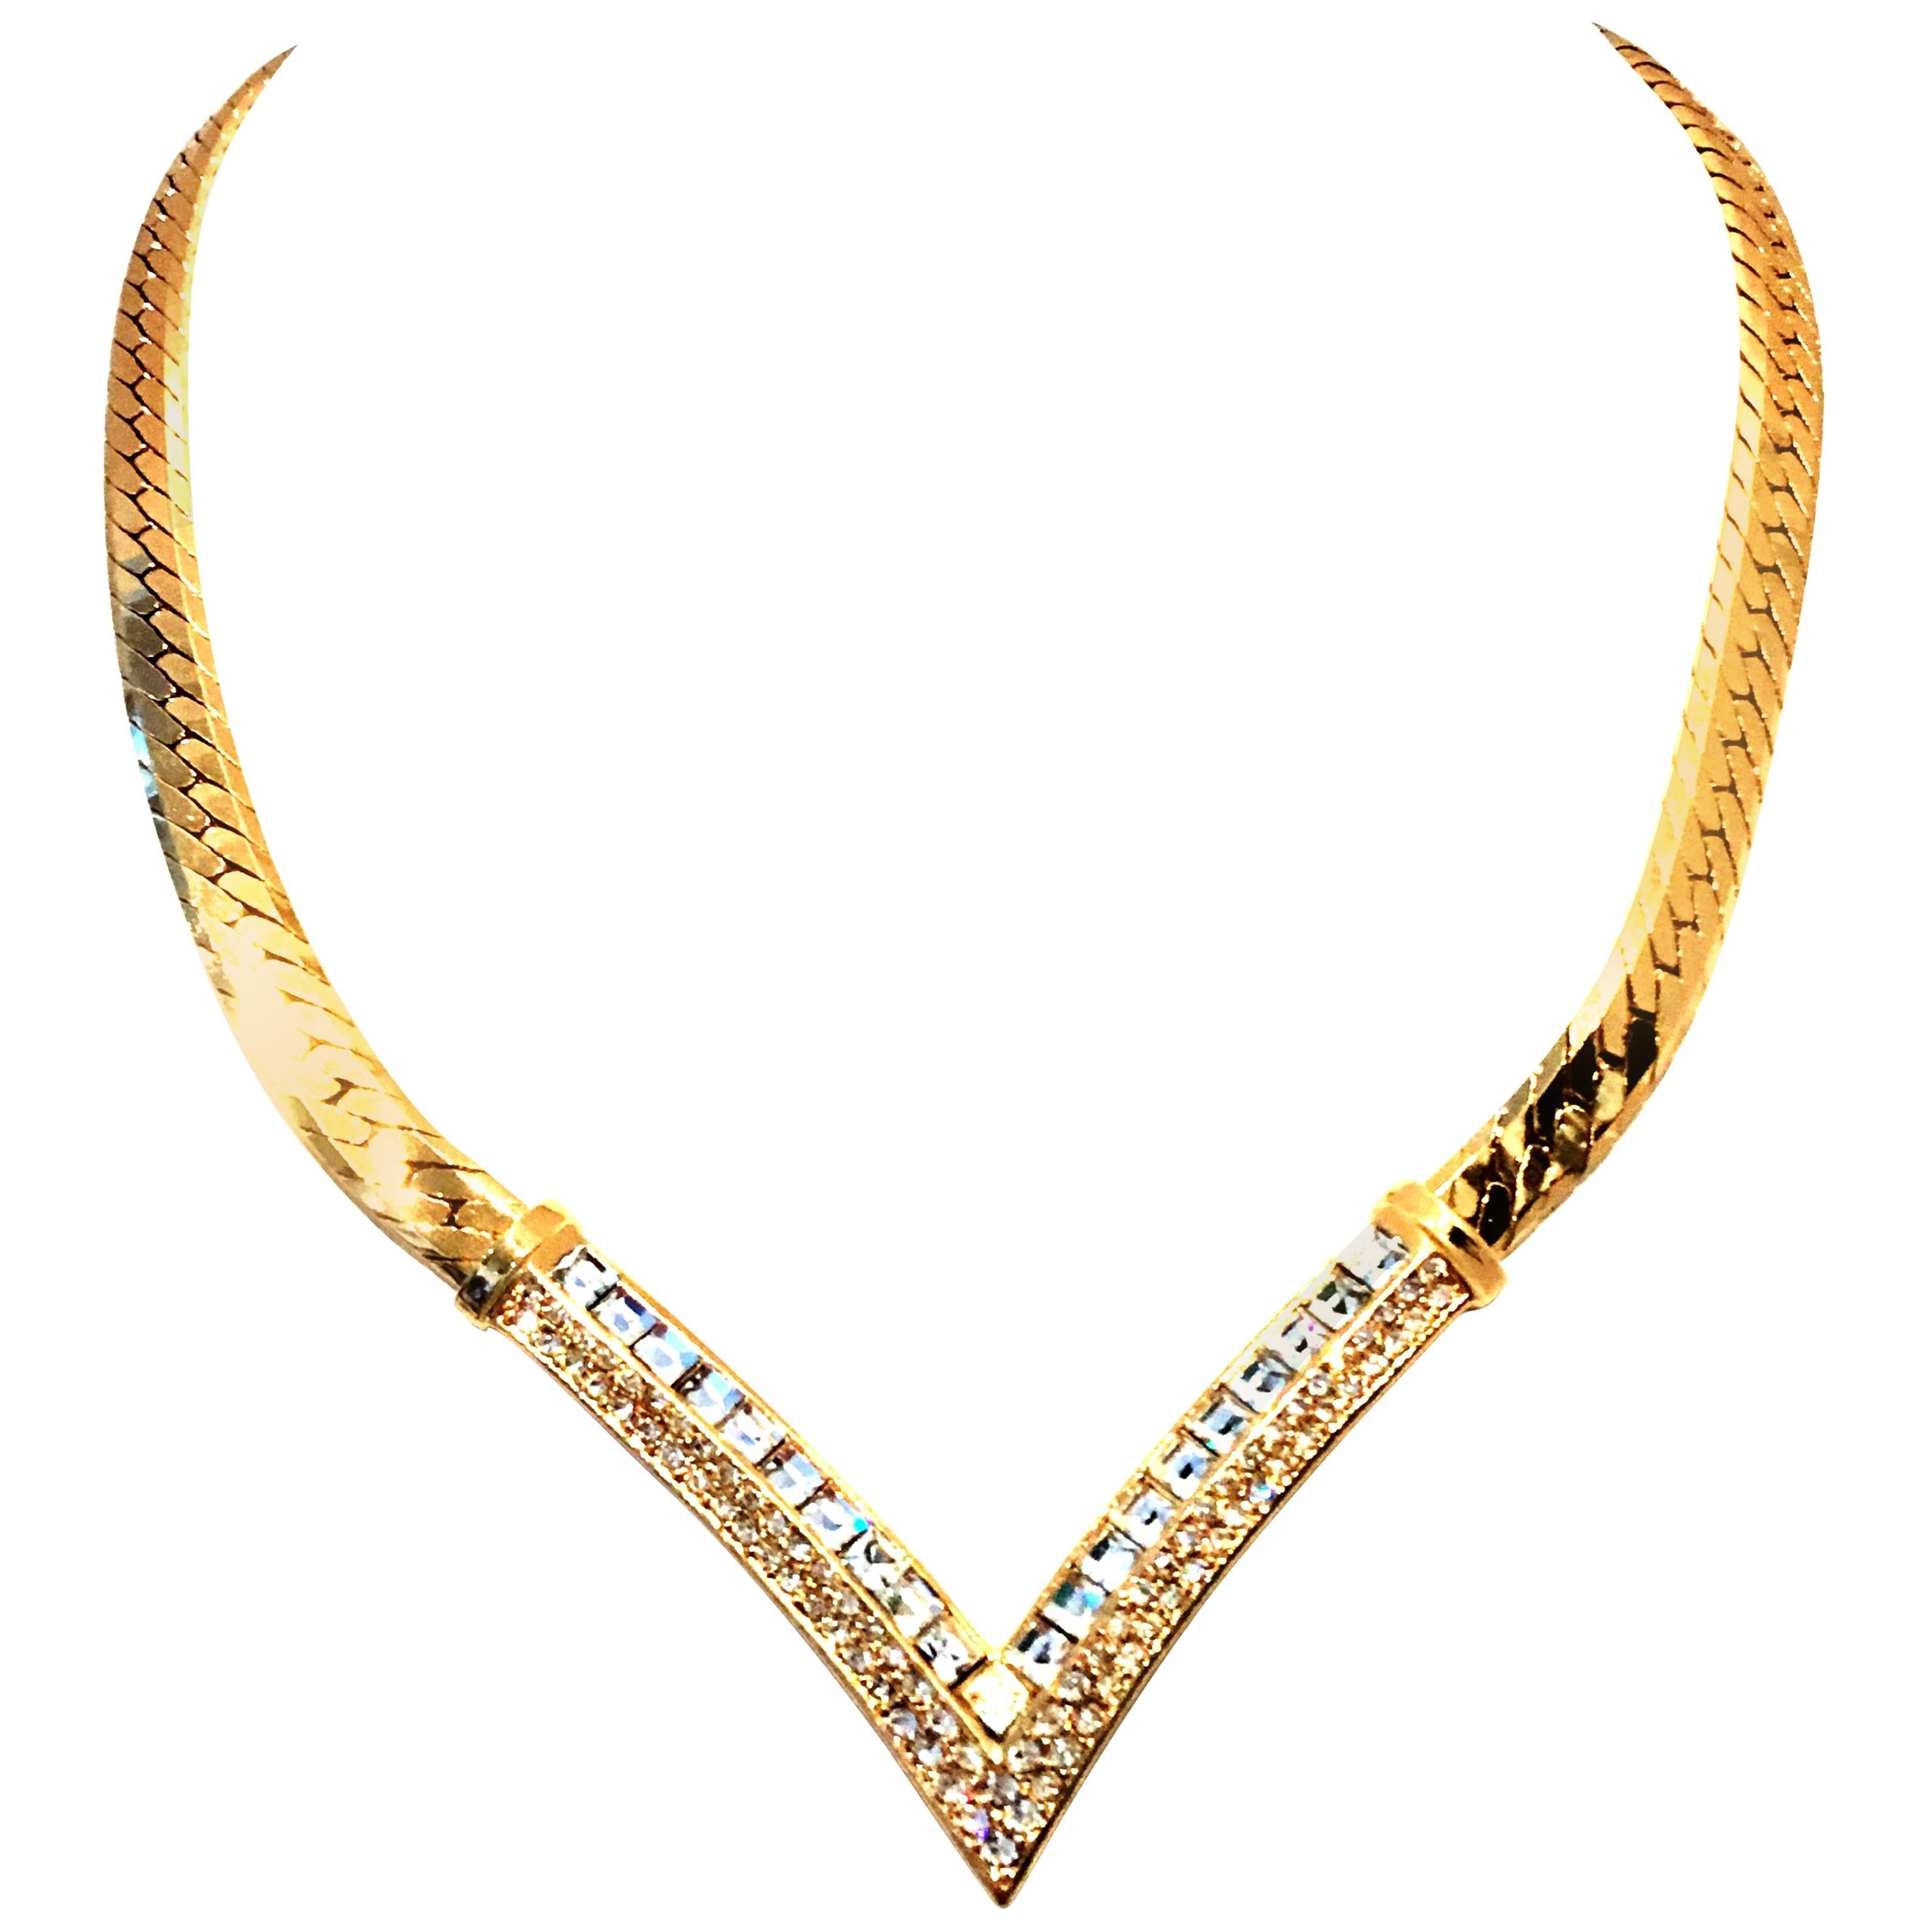 20th Century Gold Plate & Swarovski Crystal "V" Necklace By, Christian Dior